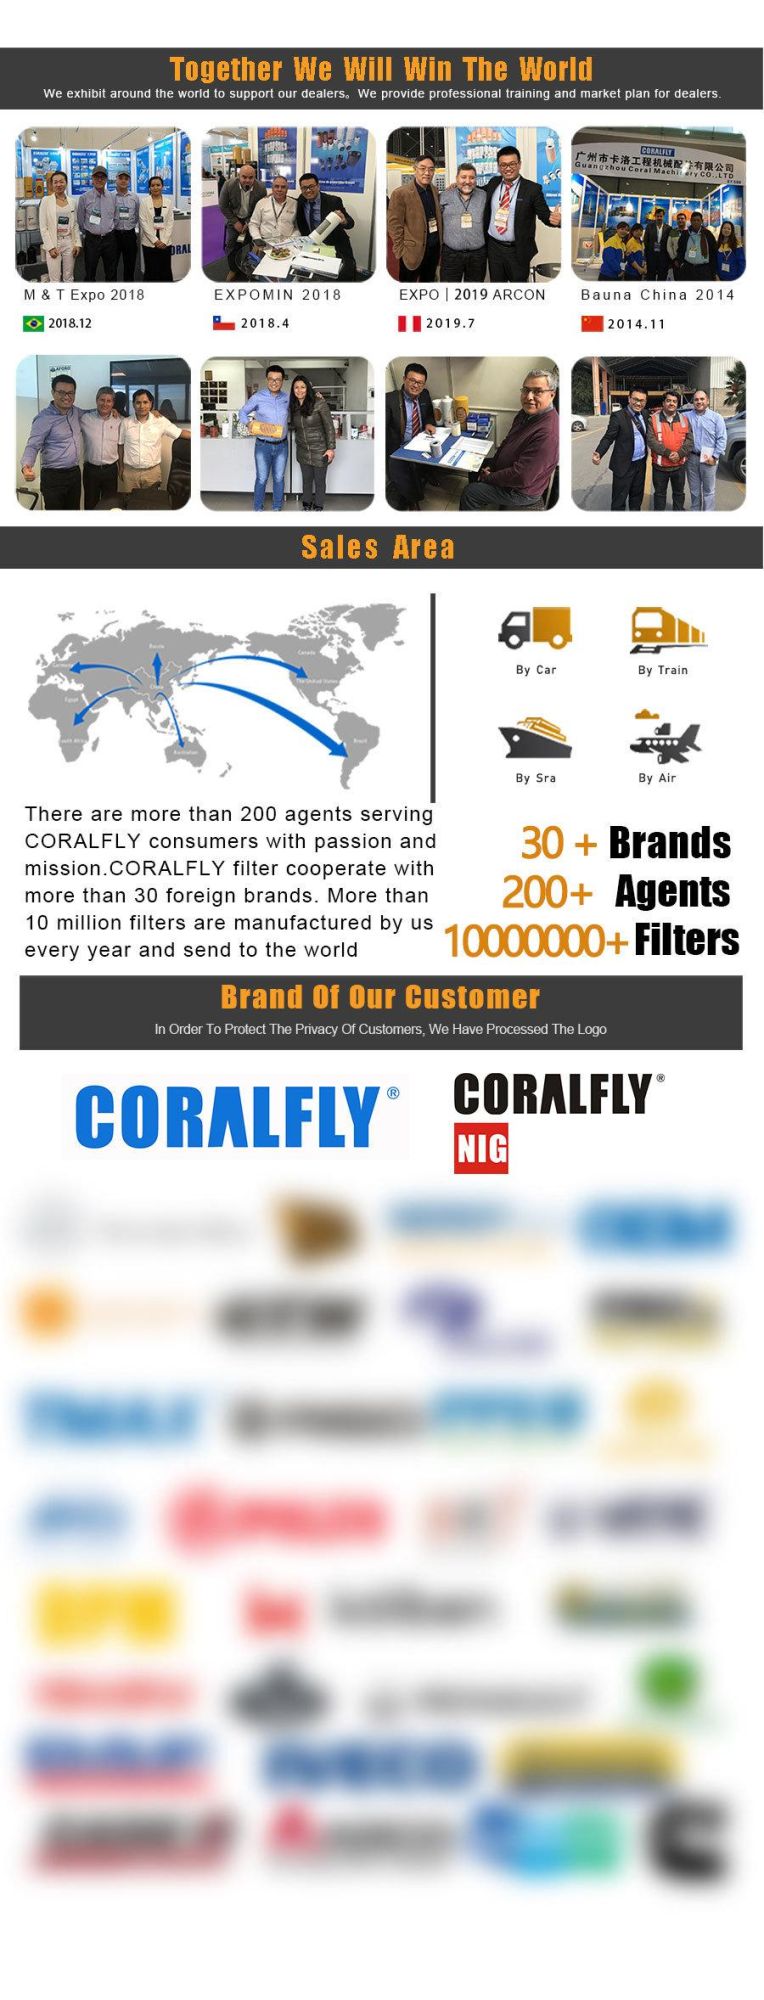 Coralfly Air Filter 47220-39802 47220-39800 Af975m Af976 P18-2082 P12-4045 P18-1082 AC6412A AC6412b for Mitsubishi/Donaldson/Micro/Fleetguard